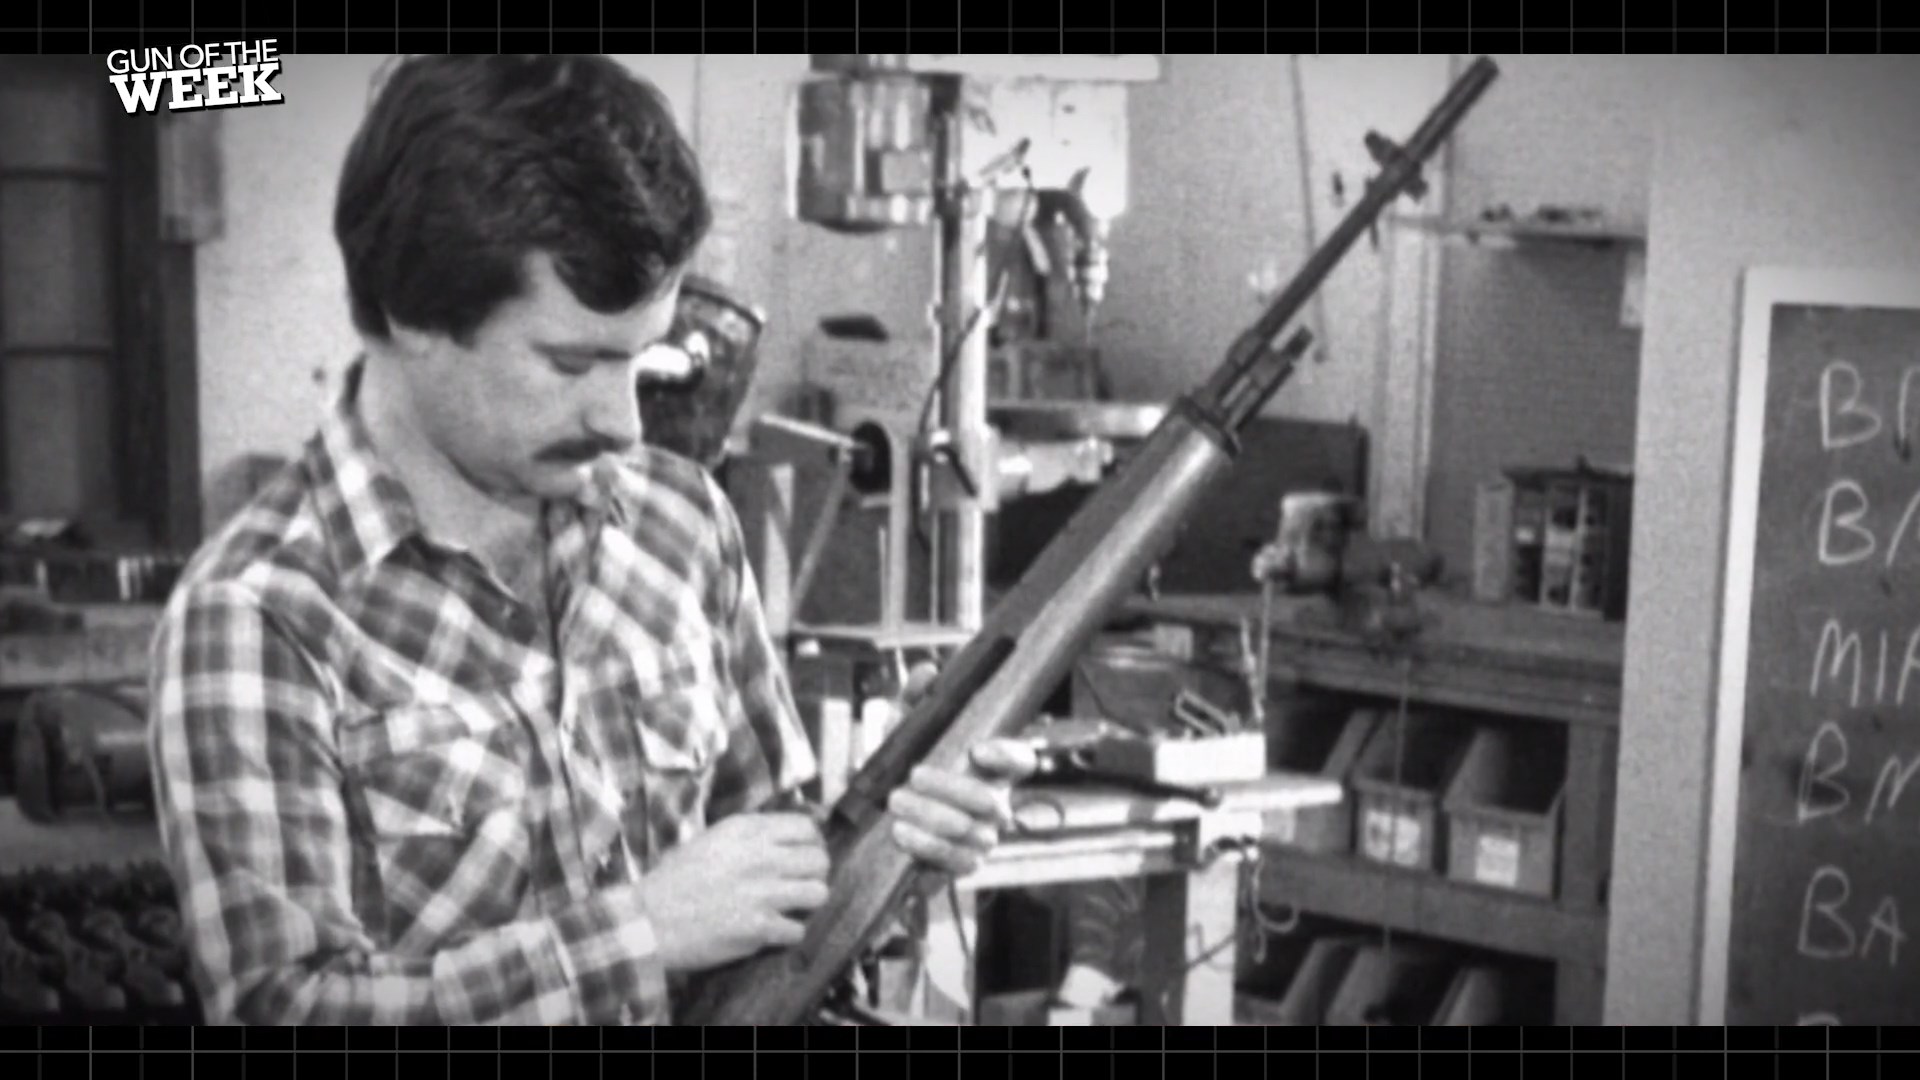 vintage black white image of man holding M1A rifle gunsmith shop indoors GUN OF THE WEEK text top left corner